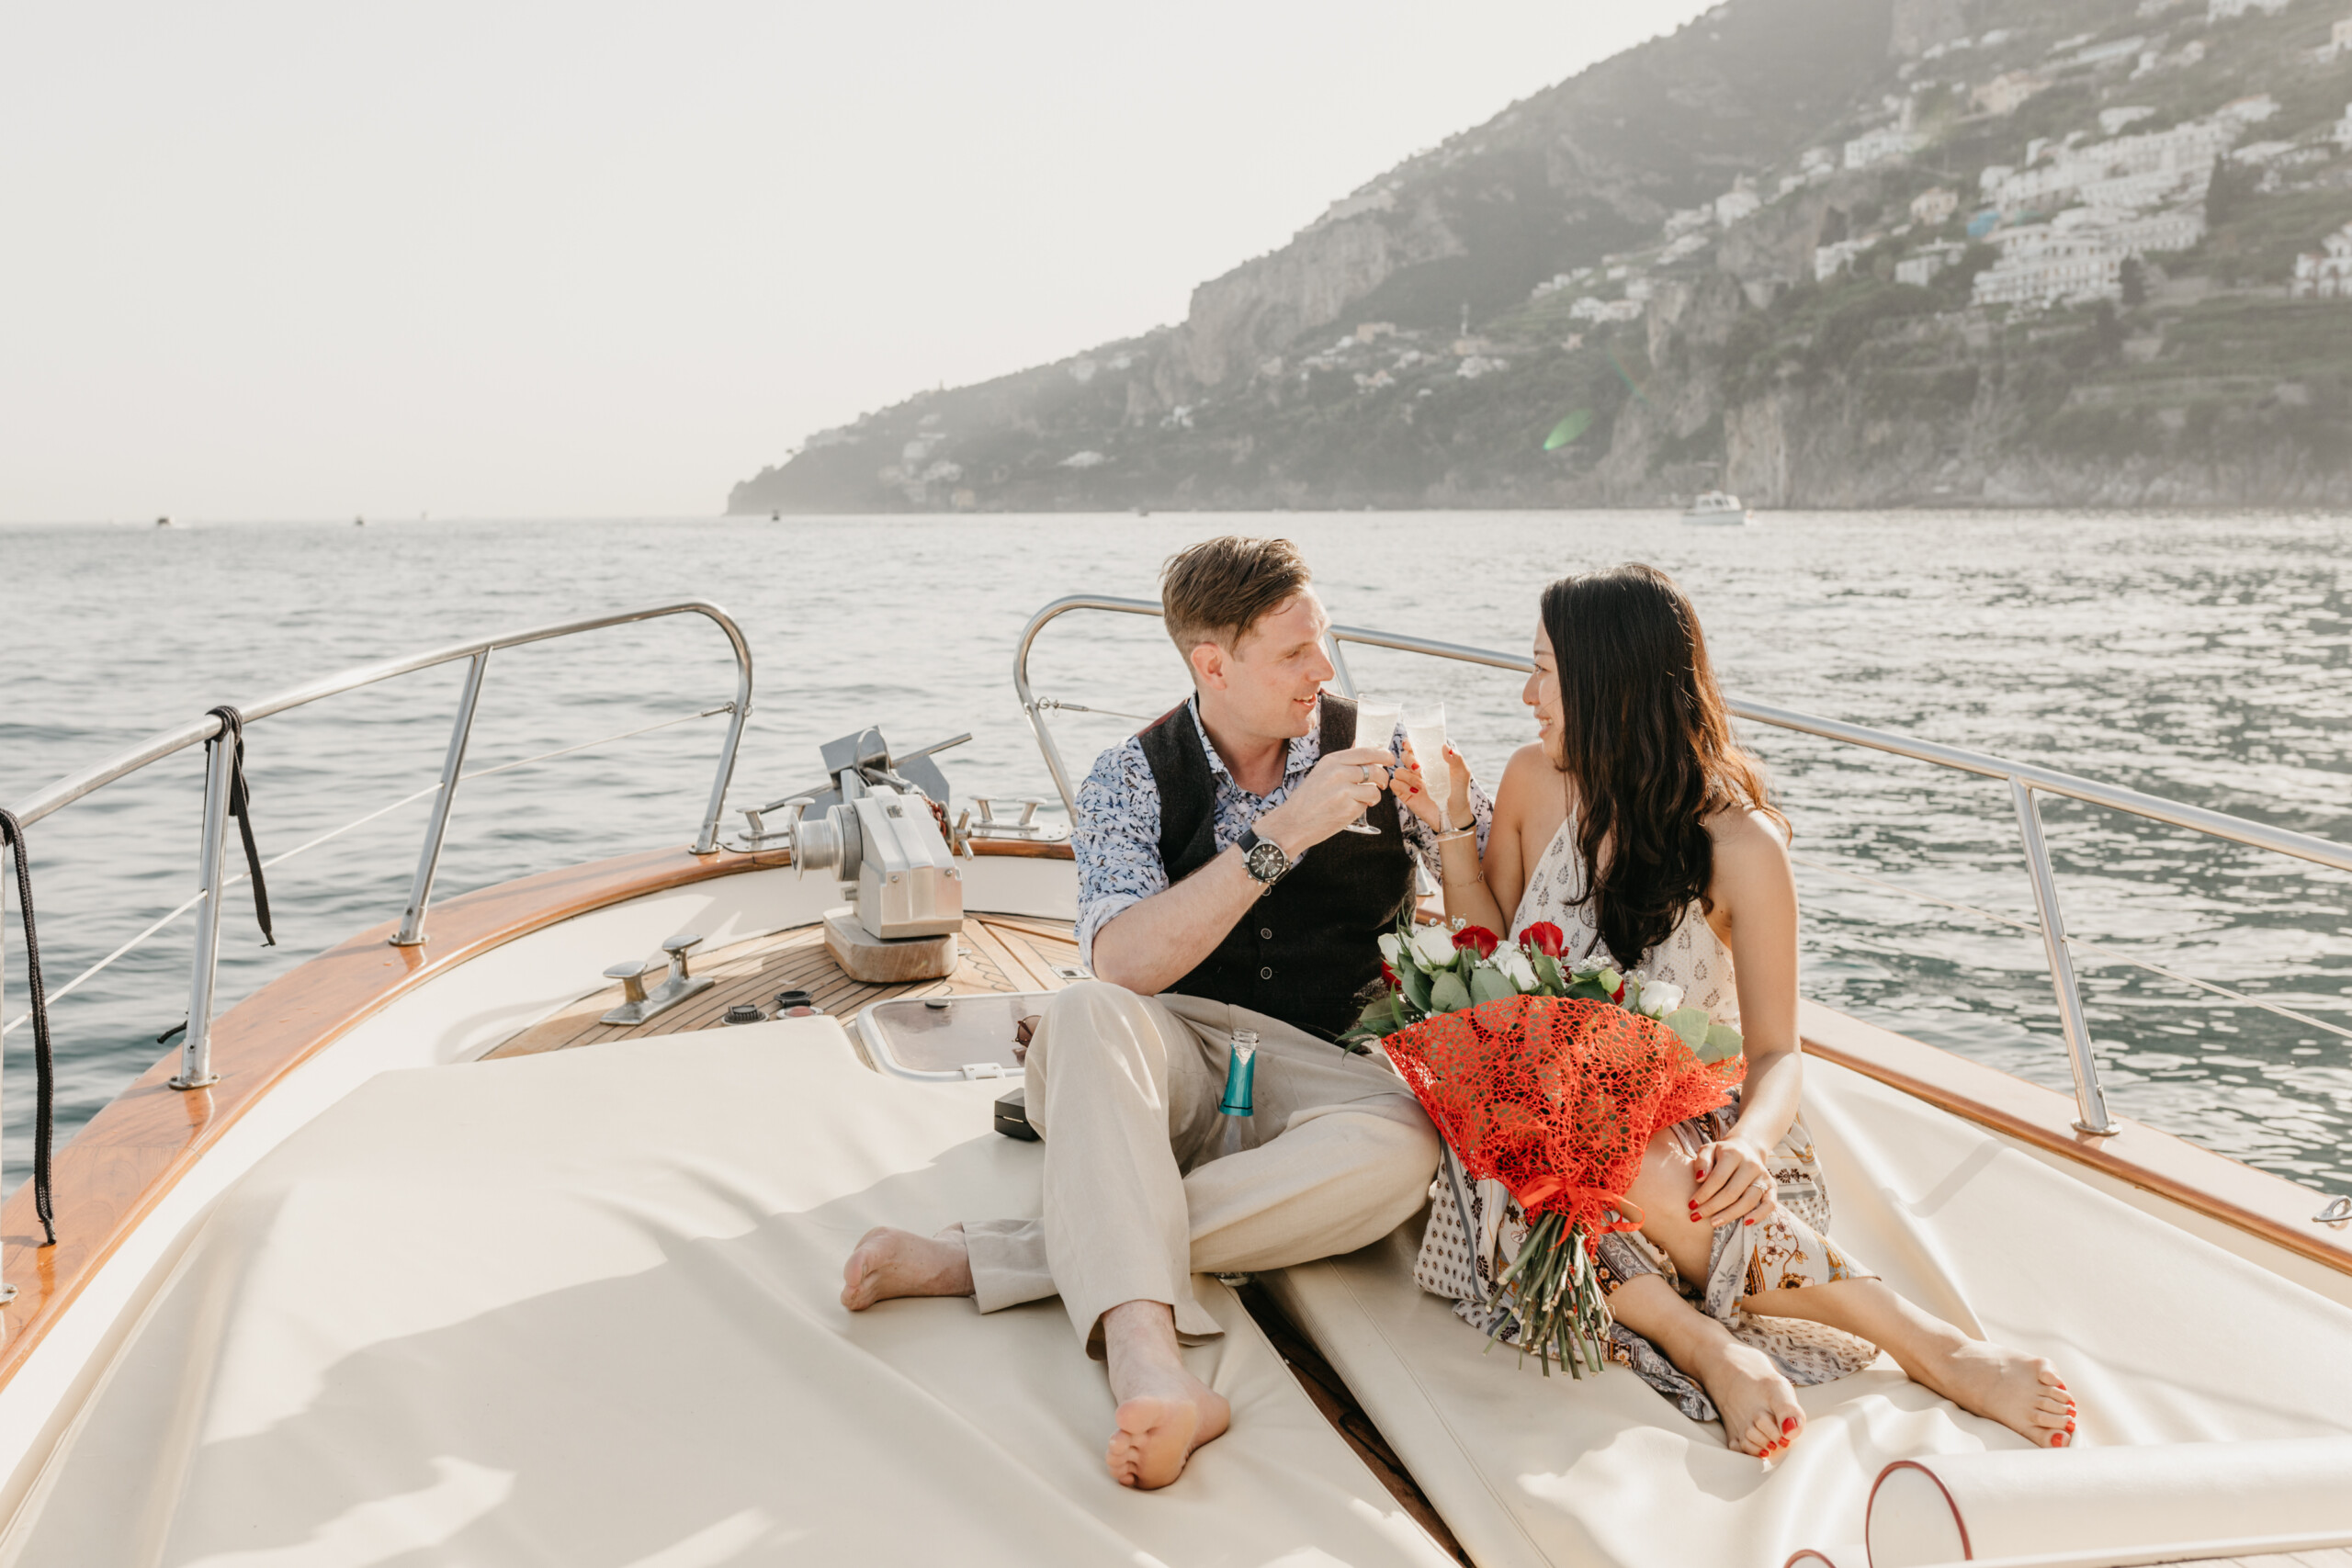 Proposal photoshoot by Antonio, Localgrapher on the Amalfi Coast